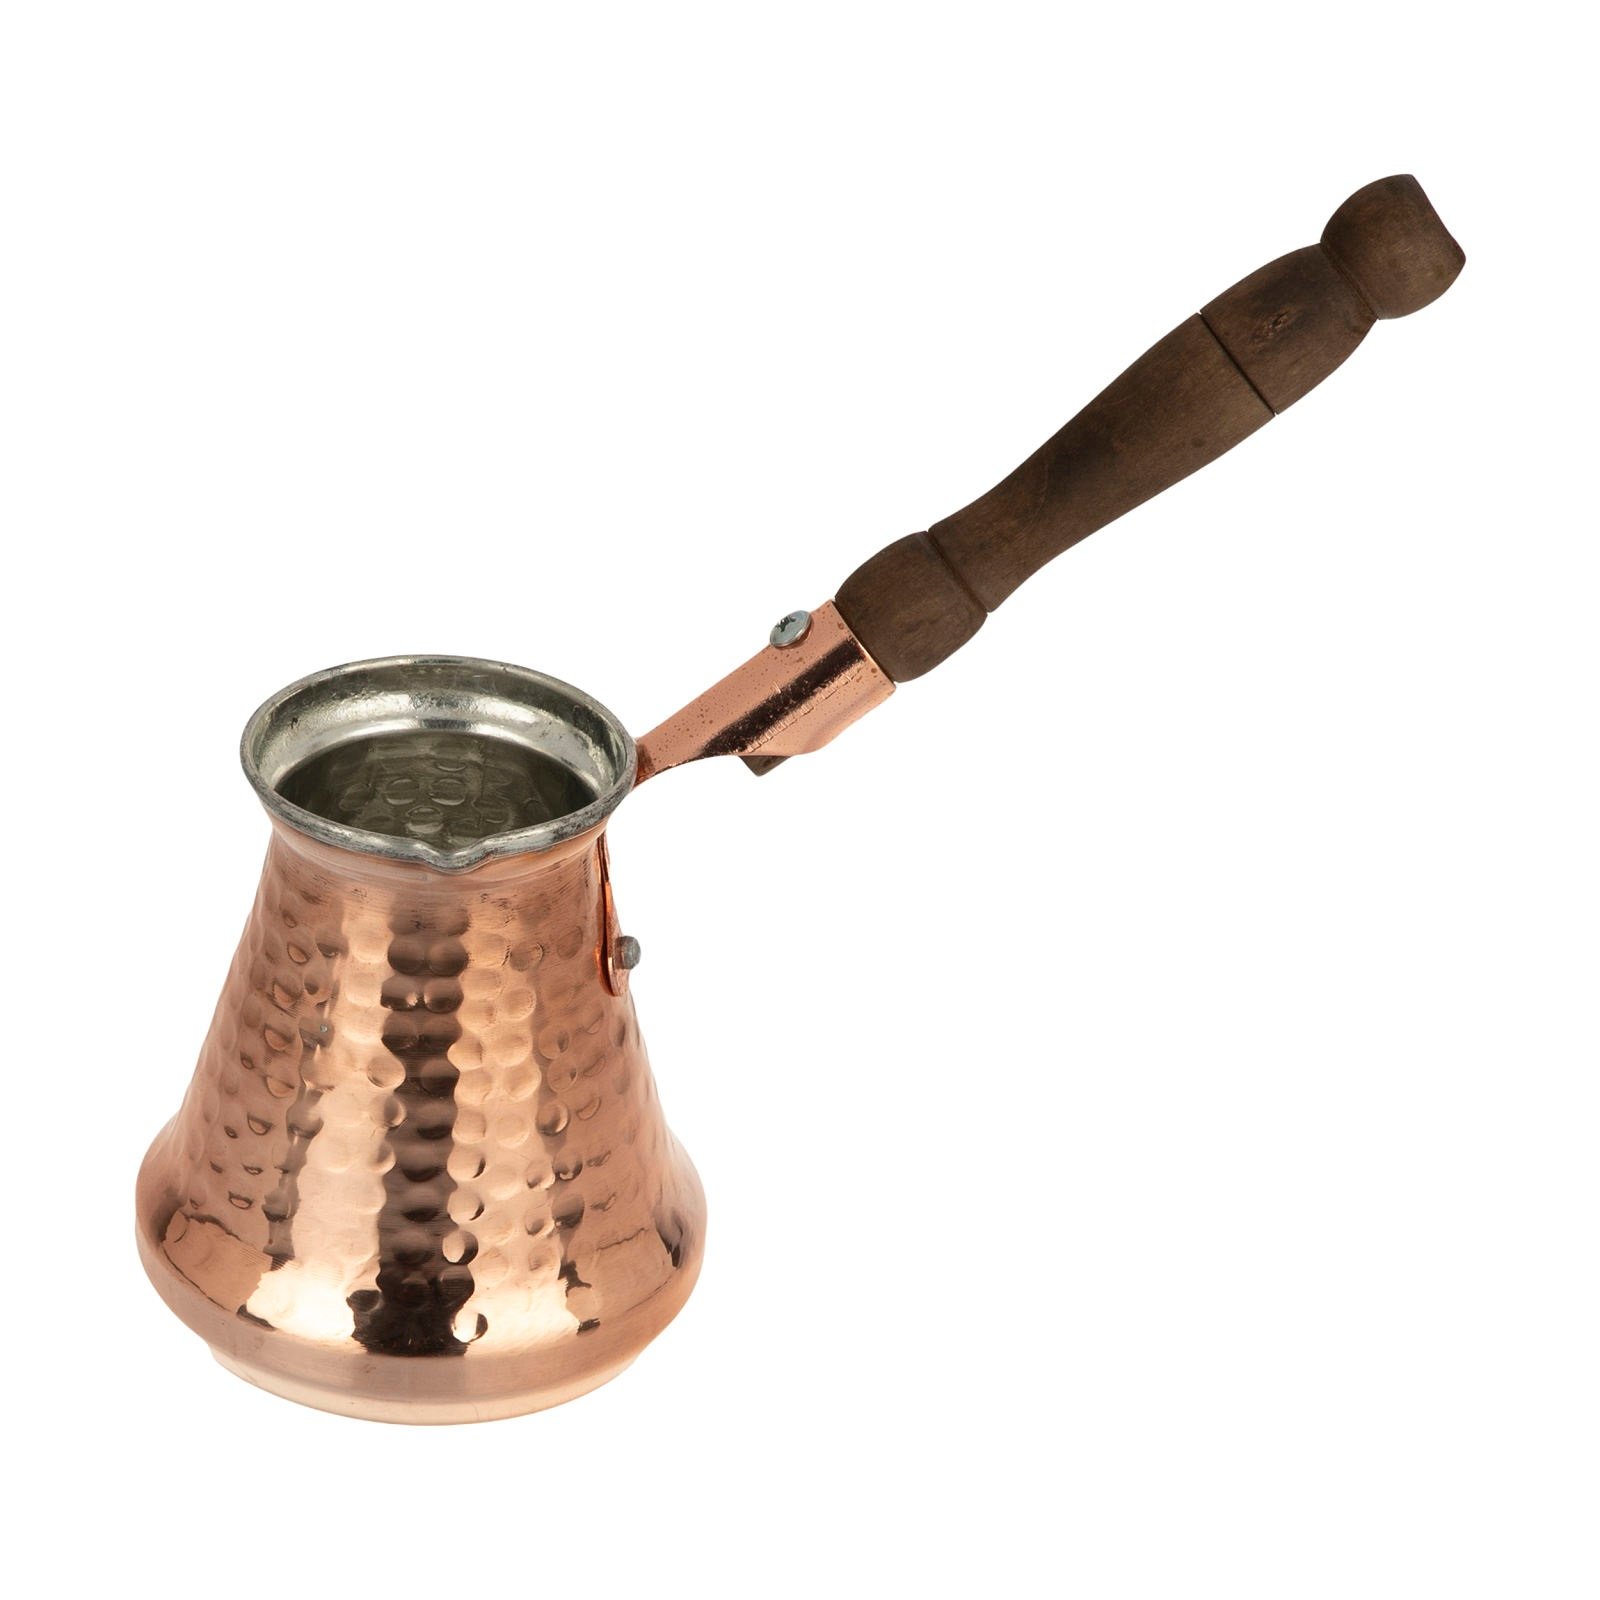 Handicraft Copper Coffeepot model S4,persian handicrafts copper,handicrafts copper,copper handicrafts